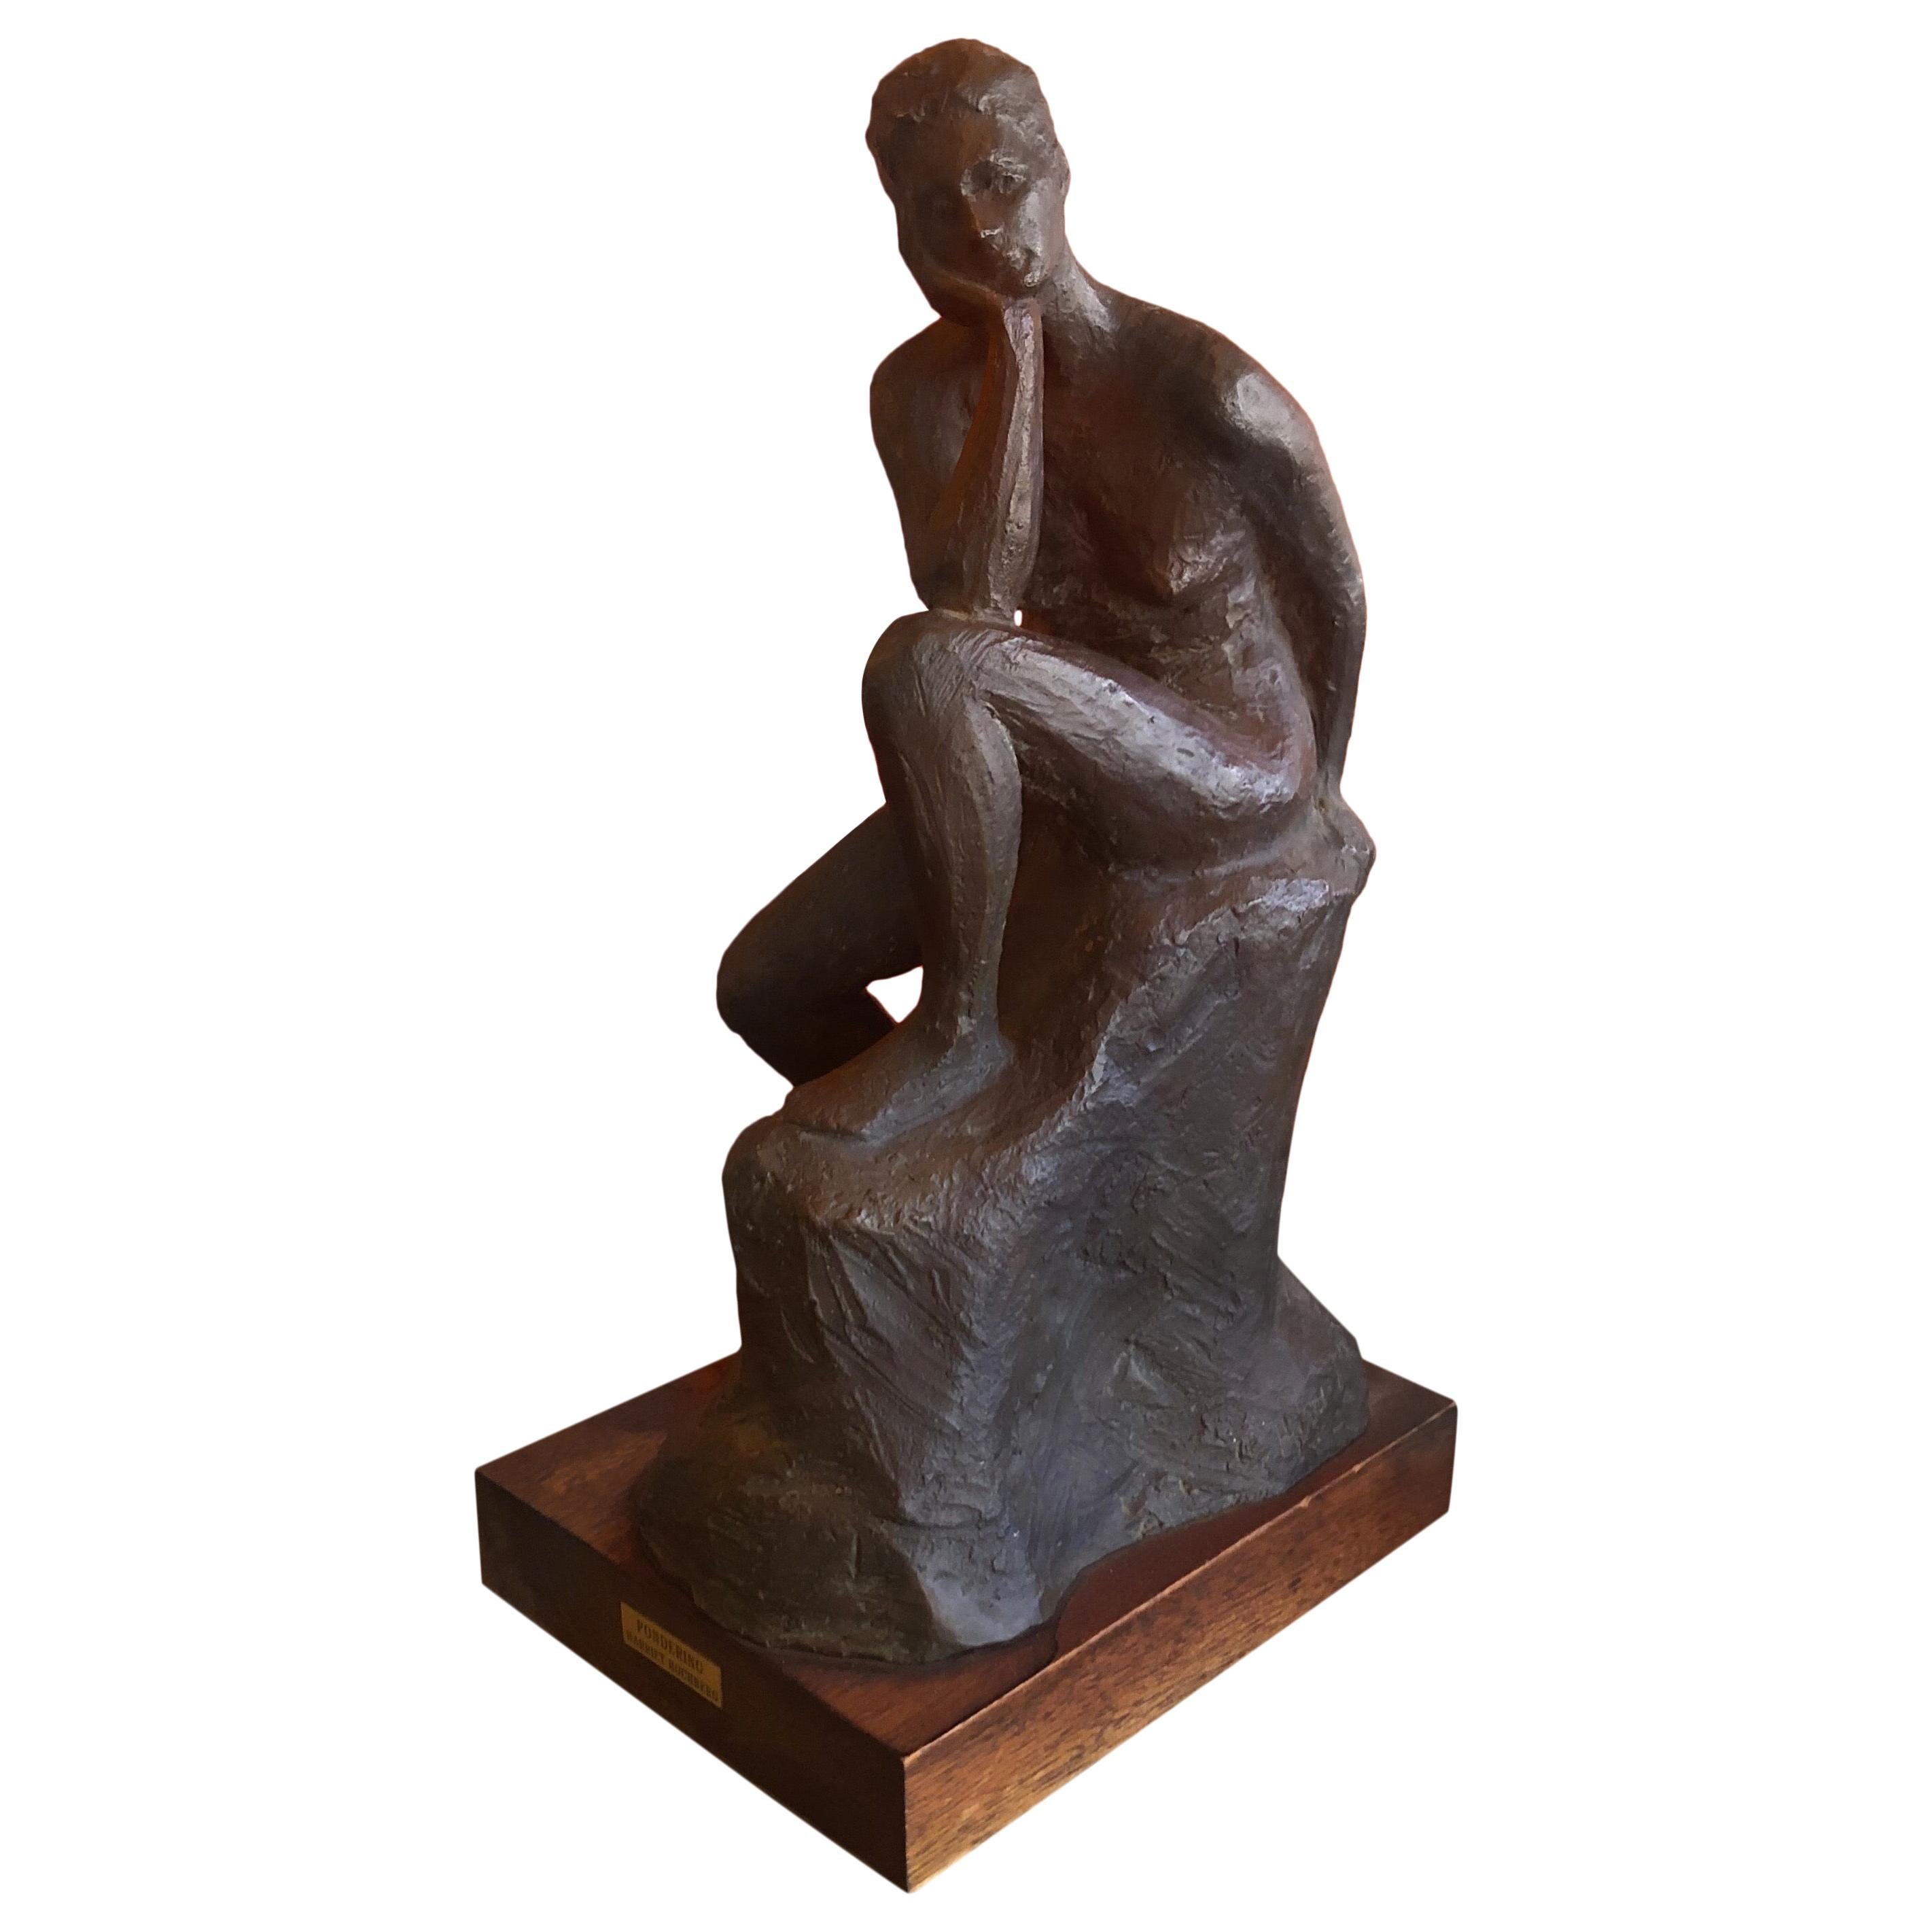 Midcentury Figurative Woman in Bronze Entitled "Pondering" by Harriet Hochberg